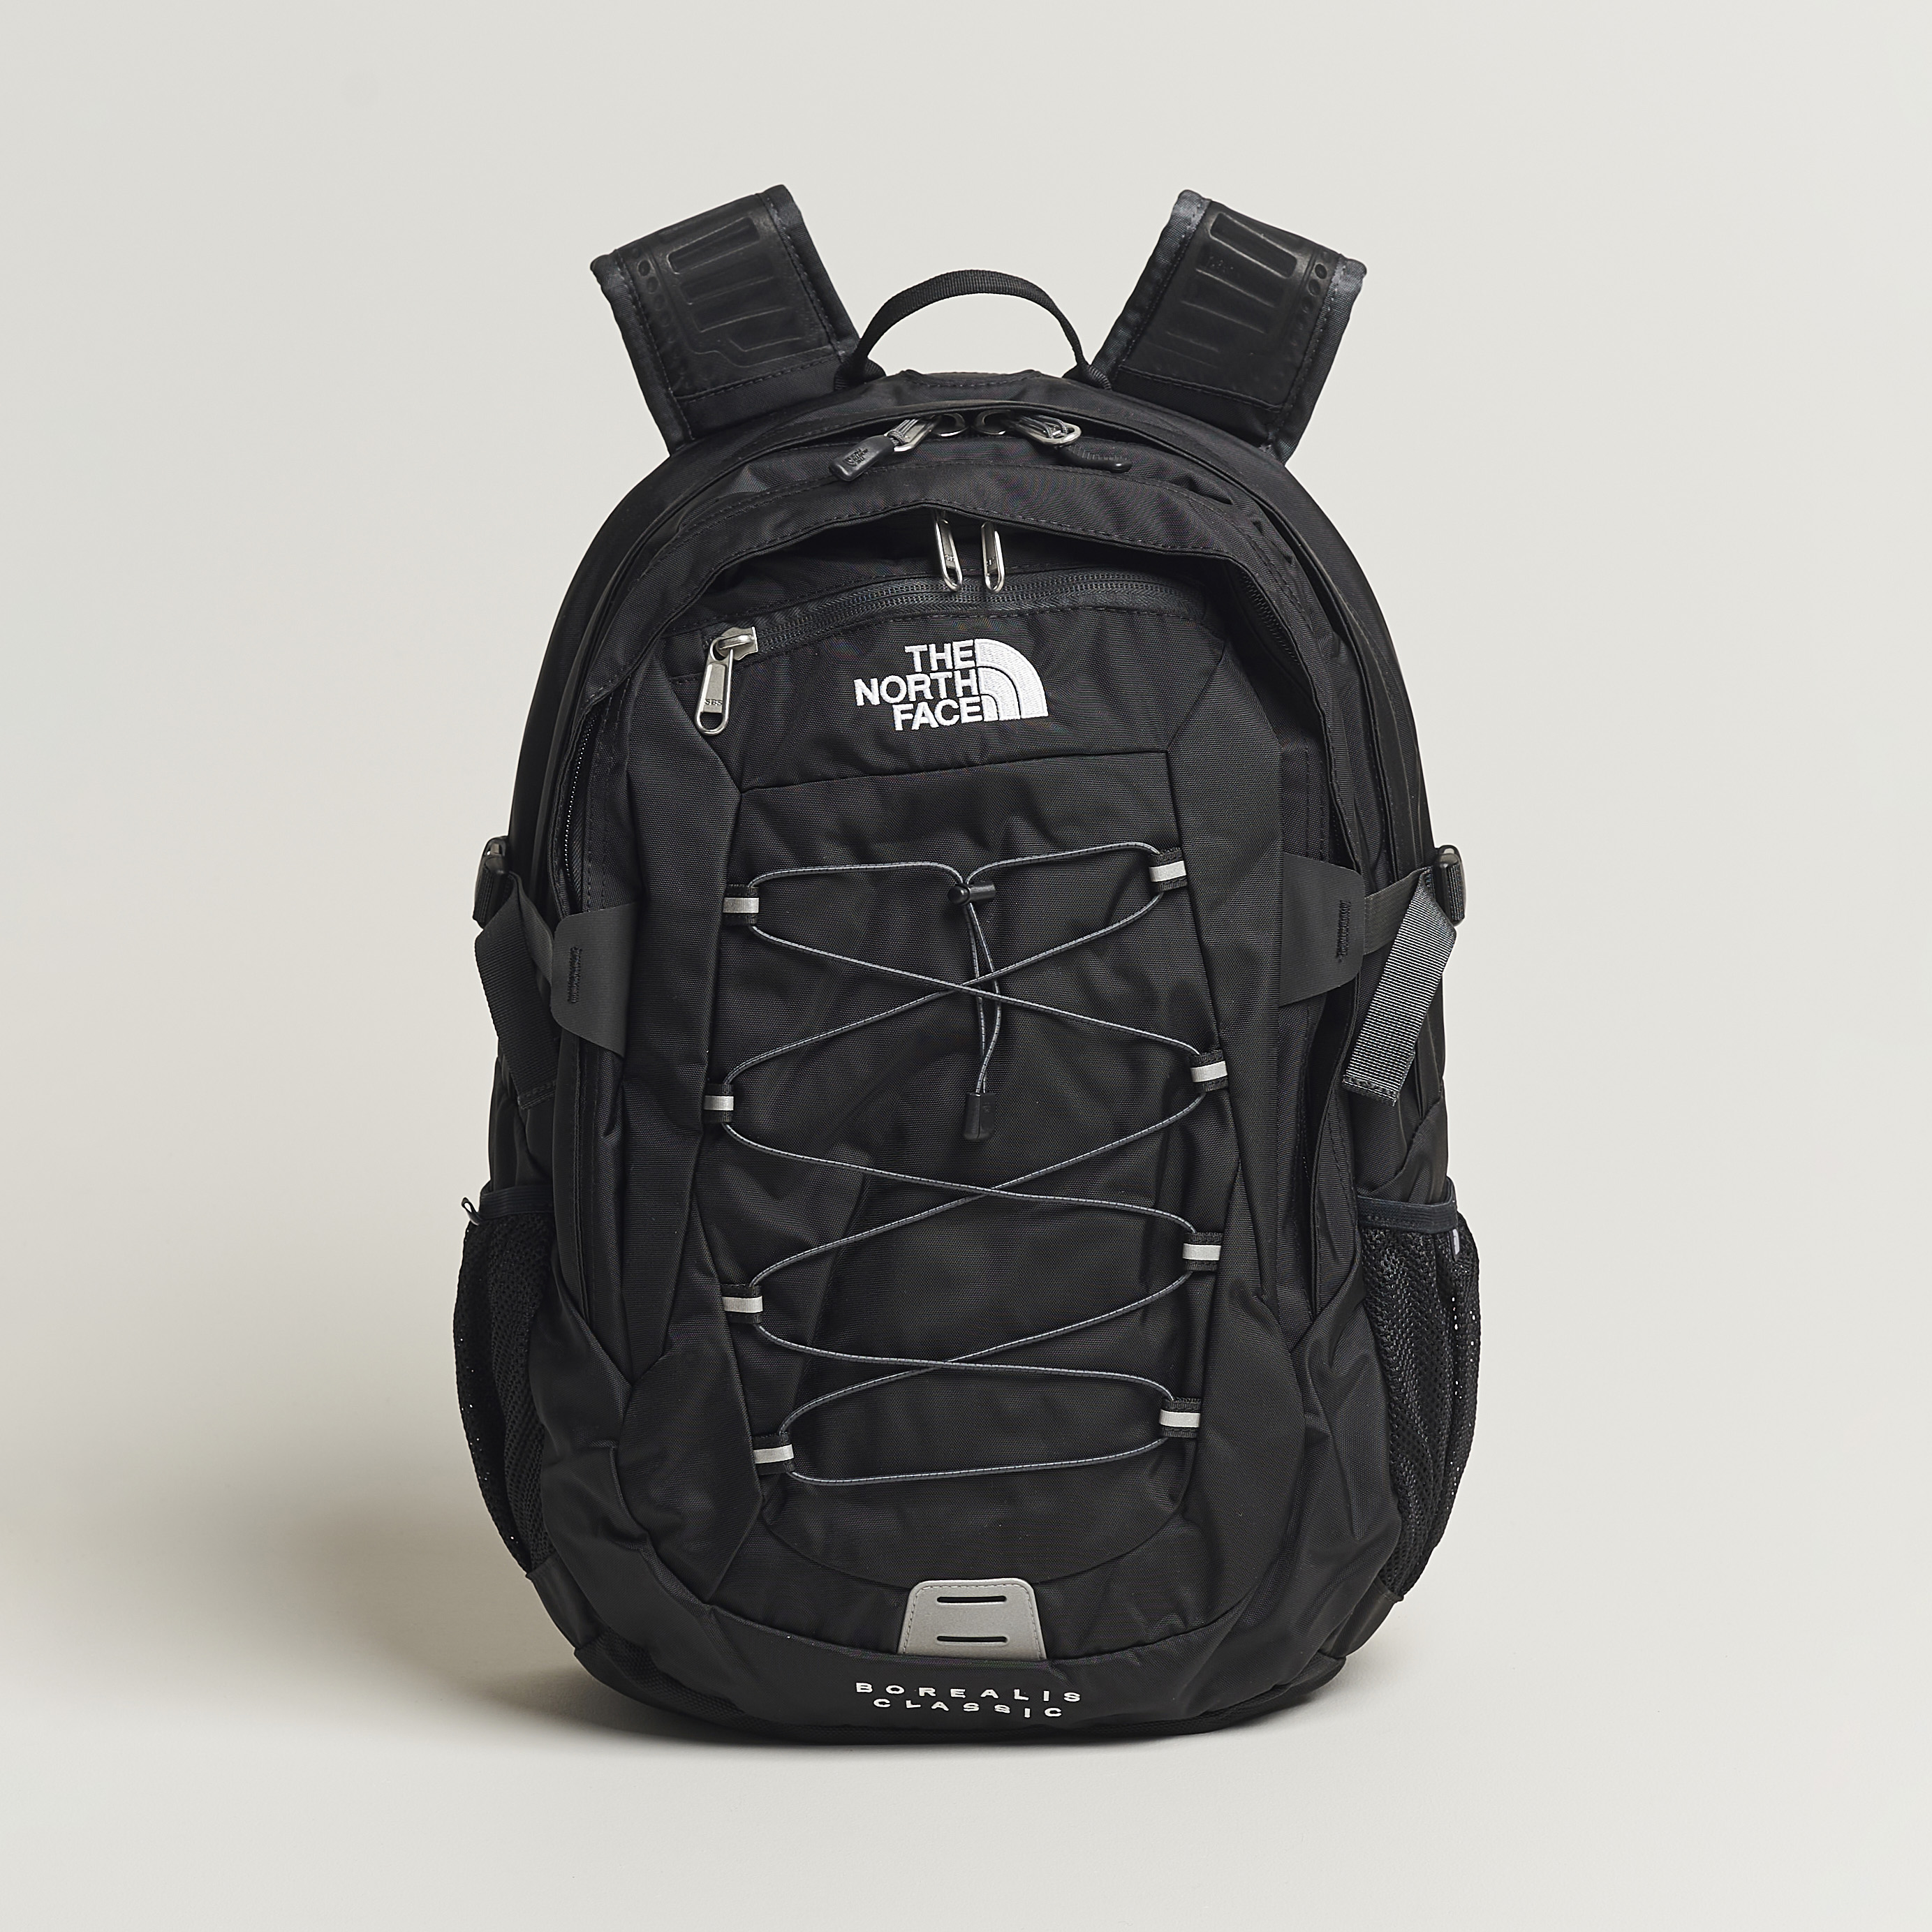 The North Face Classic Borealis Backpack Black at CareOfCarl.com